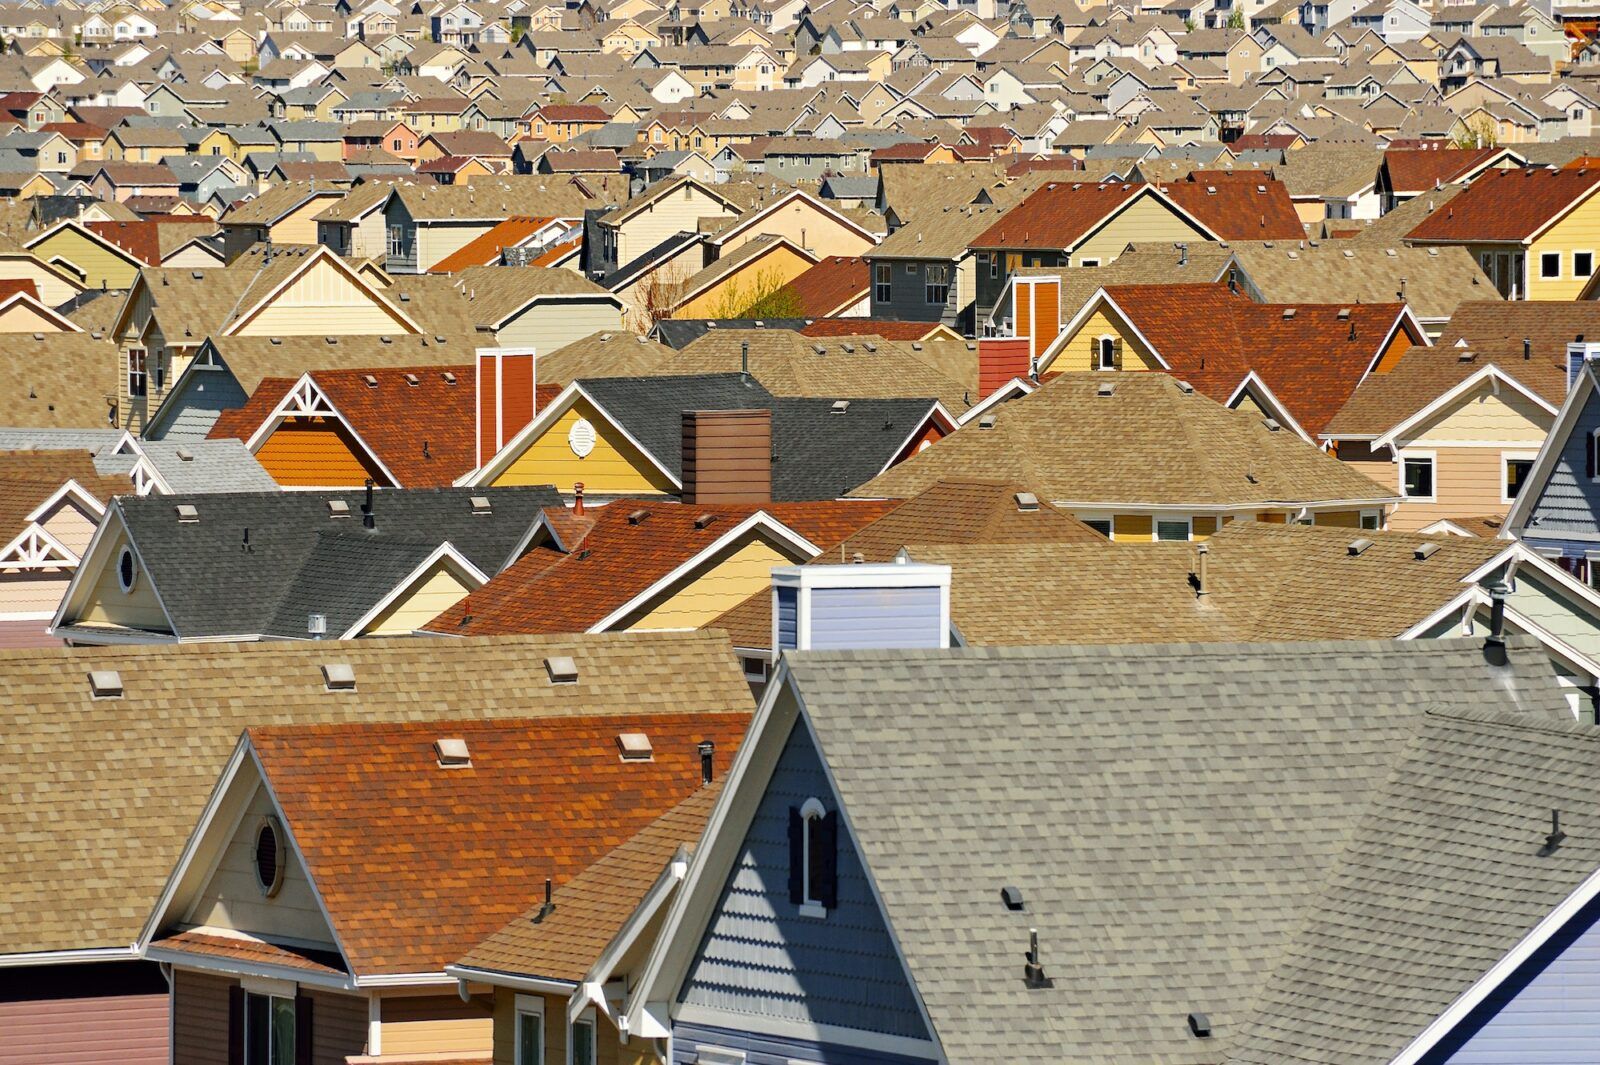 54666,Rooftops in suburban development, Colorado Springs, Colorado, United States